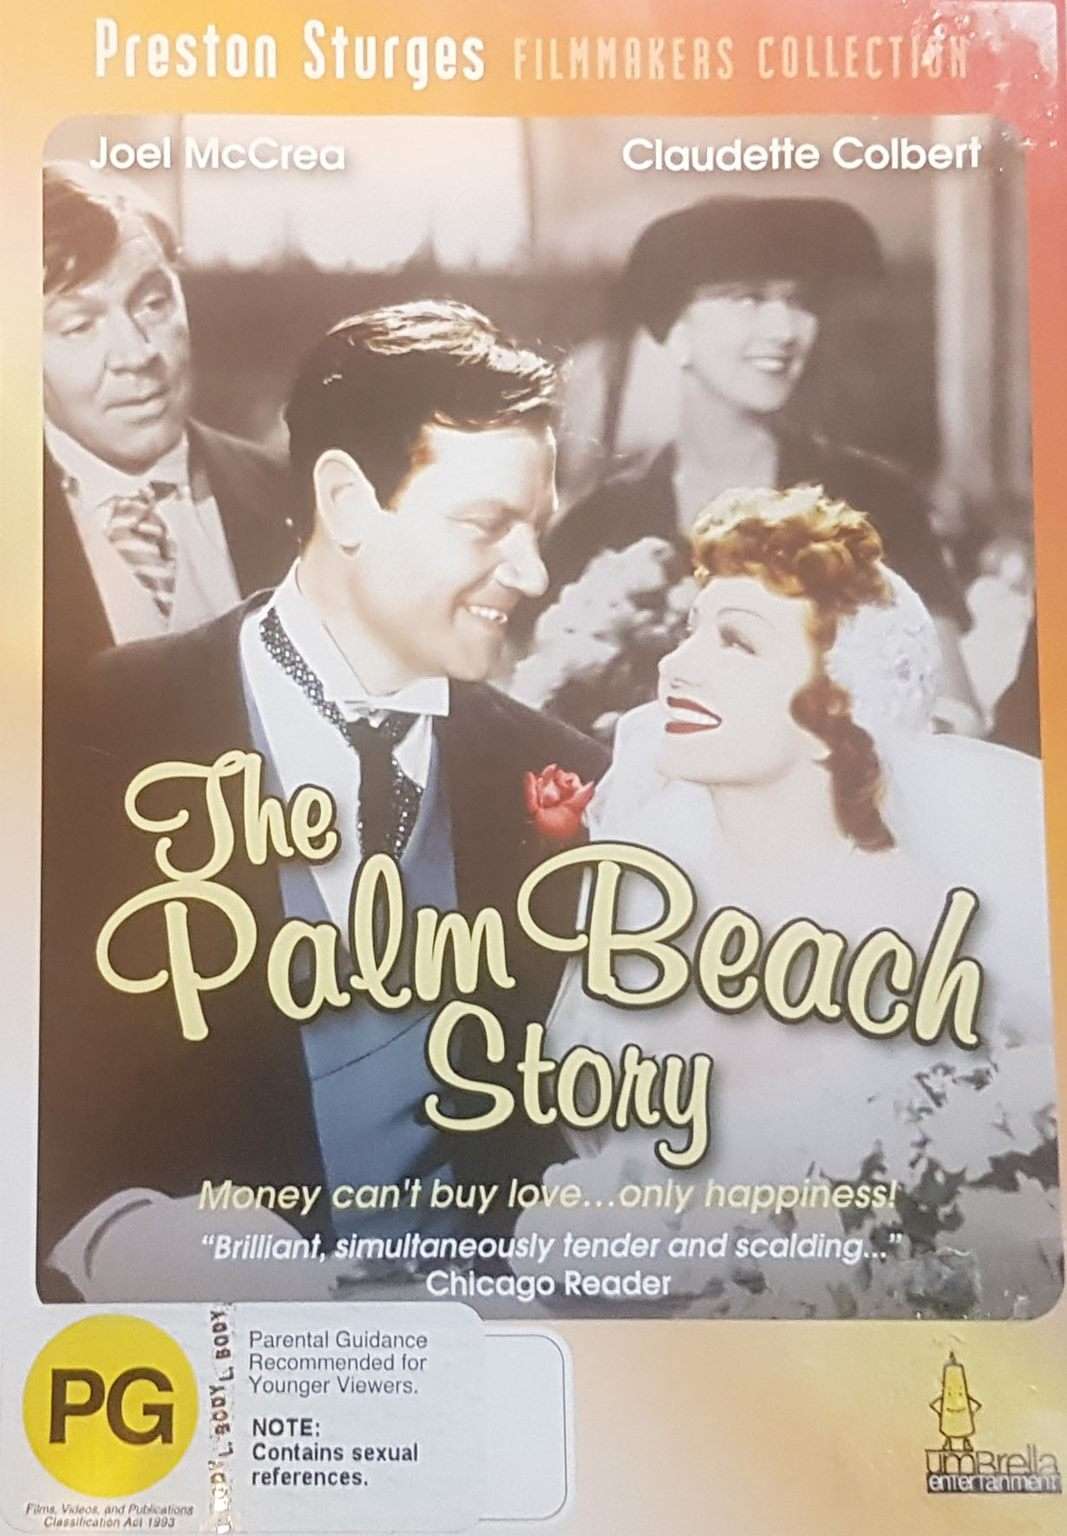 The Palm Beach Story